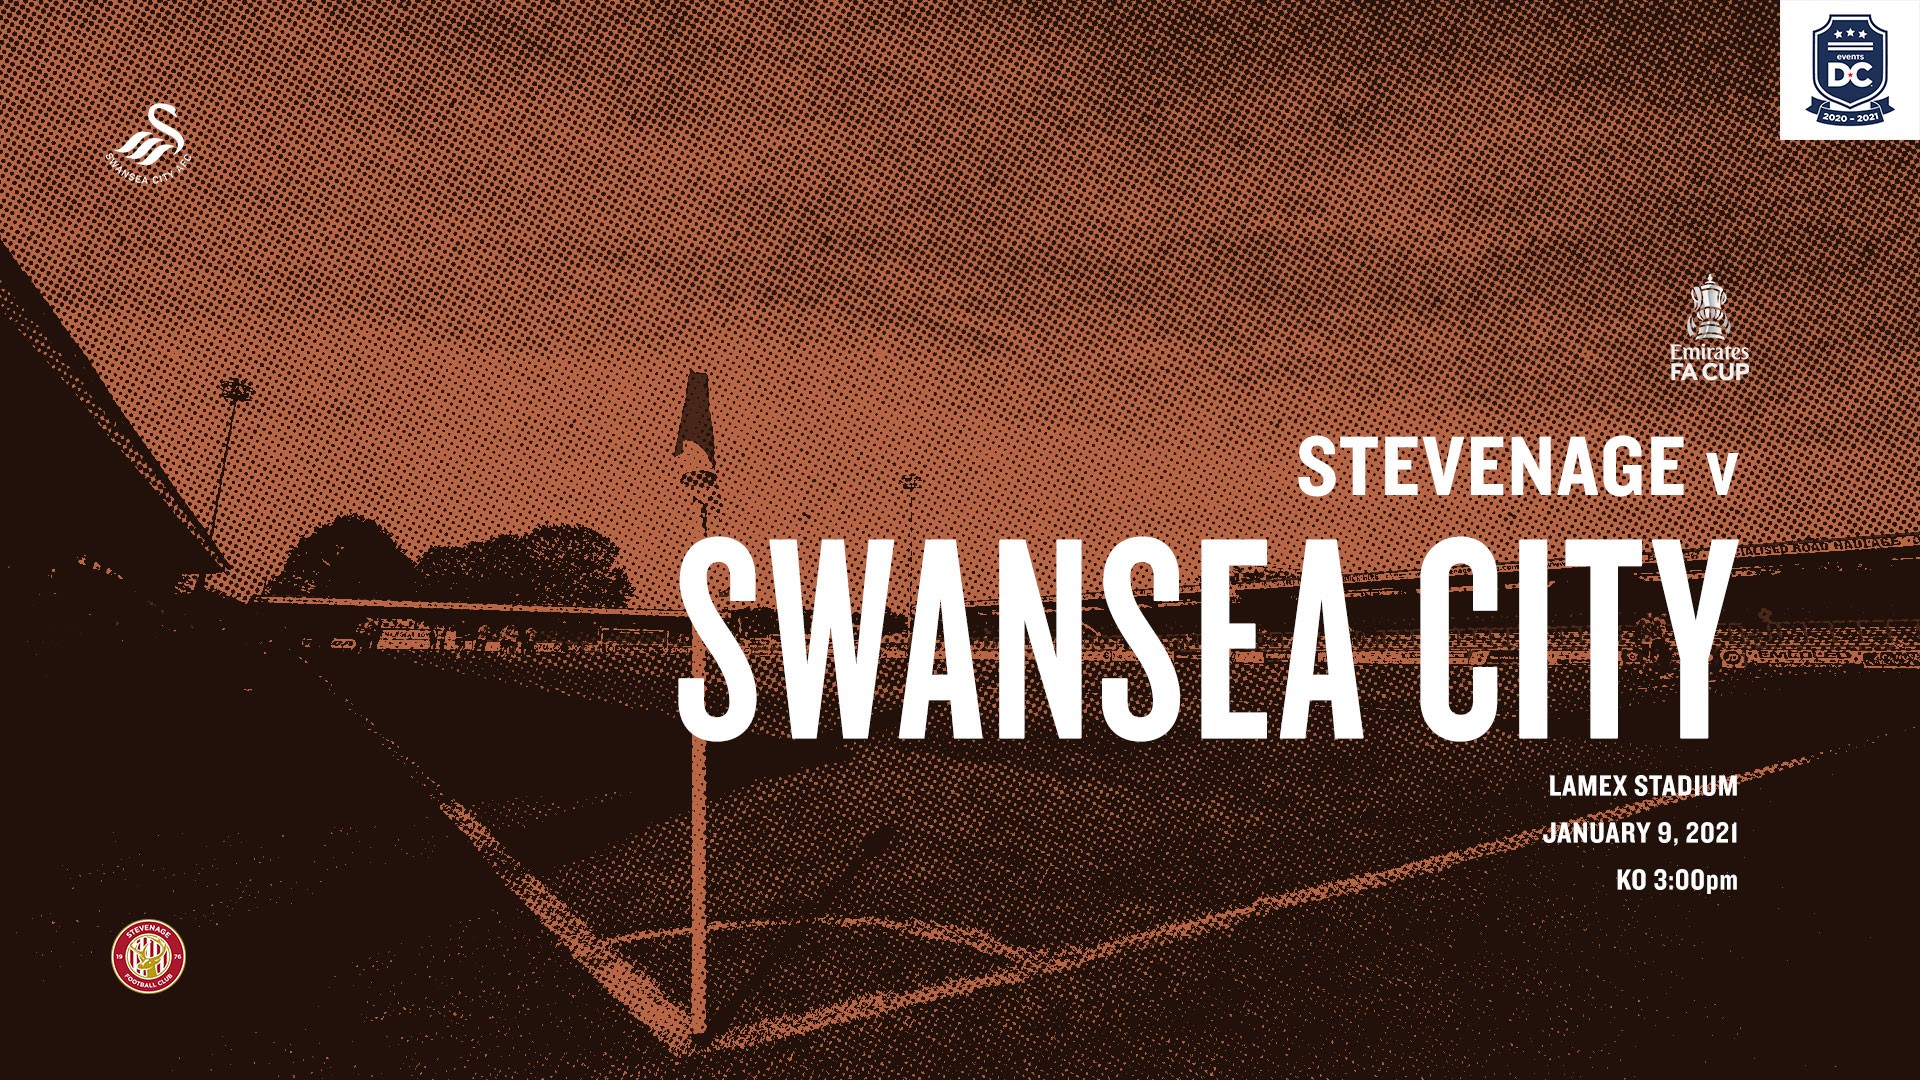 Stevenage FA Cup preview graphic